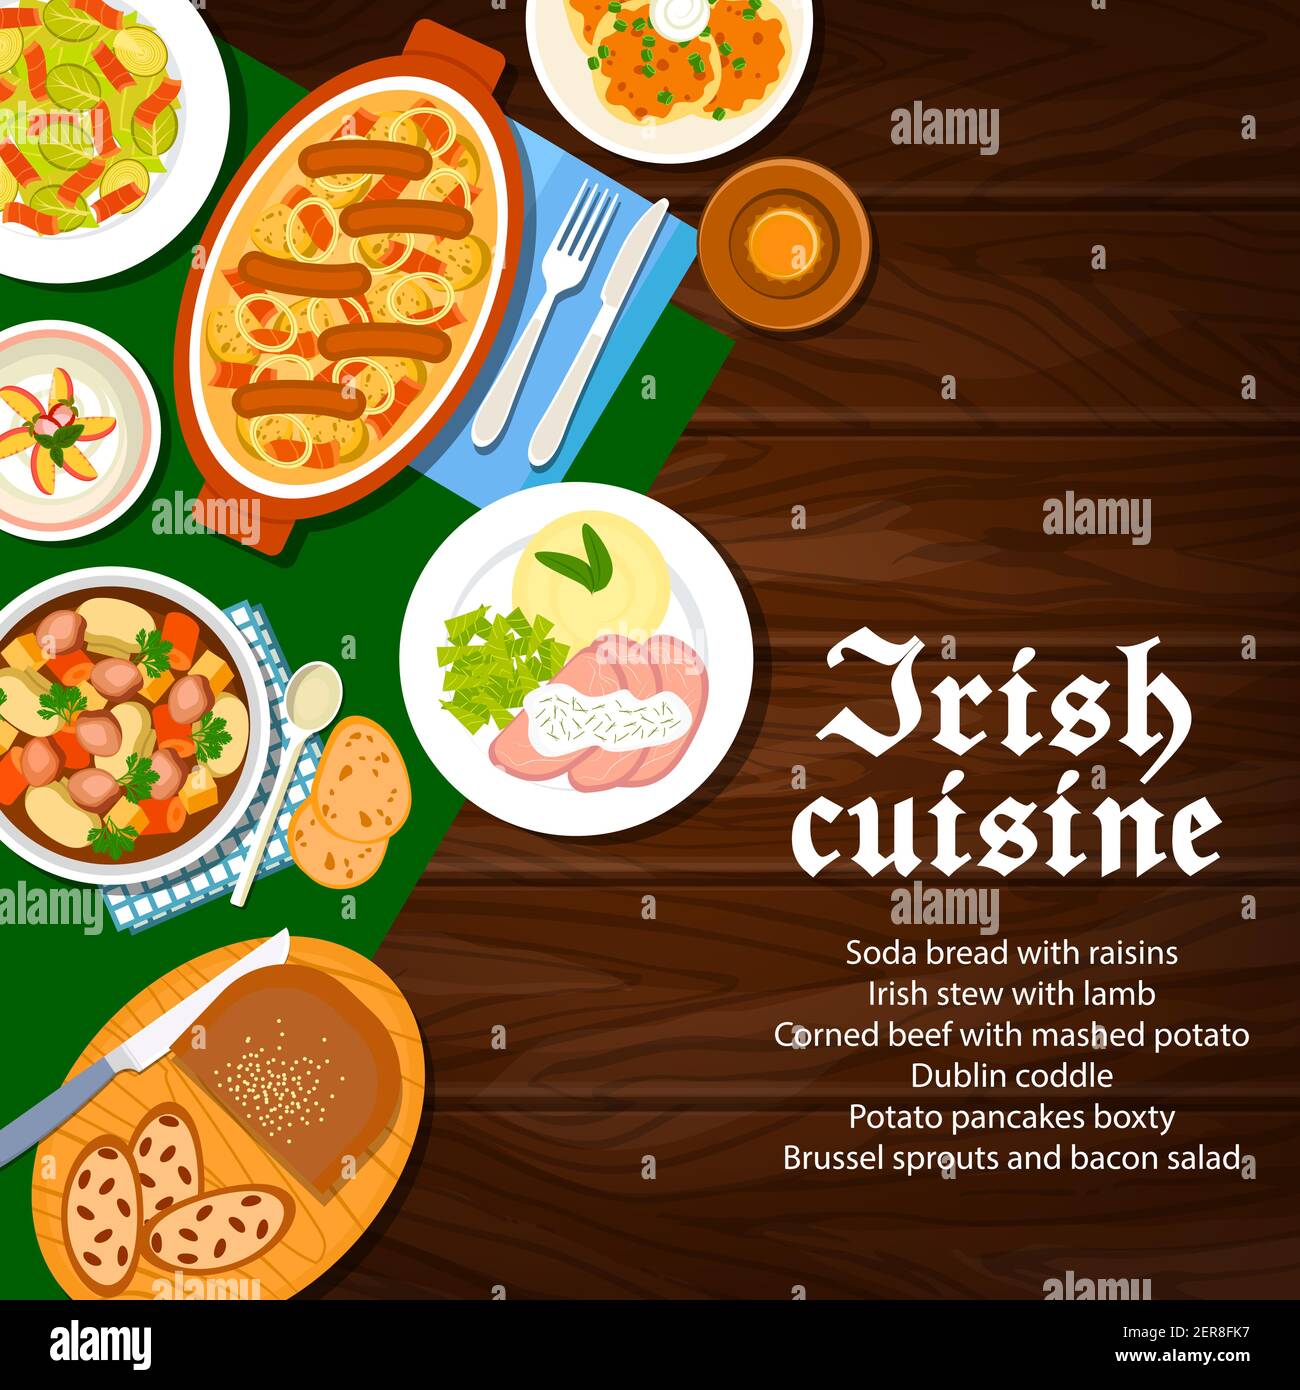 Irish cuisine food menu dishes, Ireland breakfast meals, vector breakfast bread with raisins, pudding and stew. Irish cuisine and restaurant menu food Stock Vector